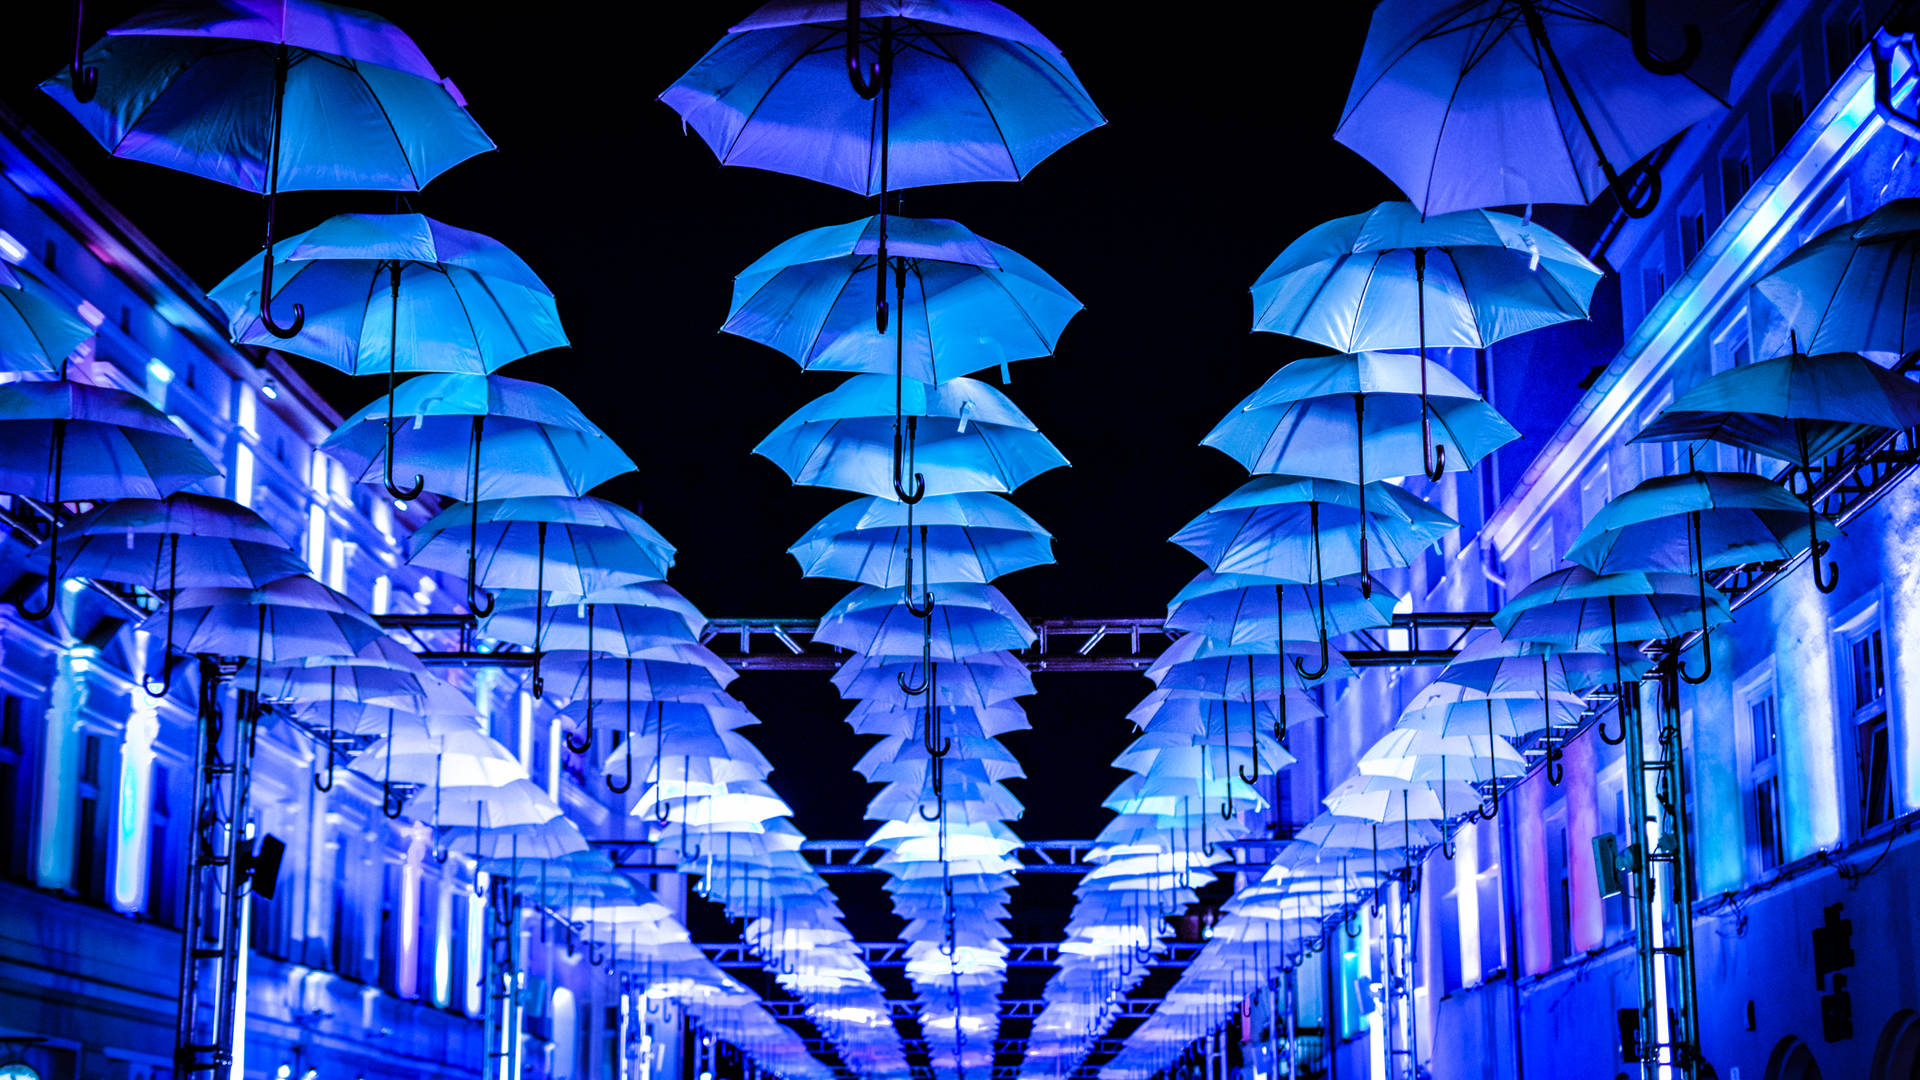 Blue Umbrellas On The Ceiling